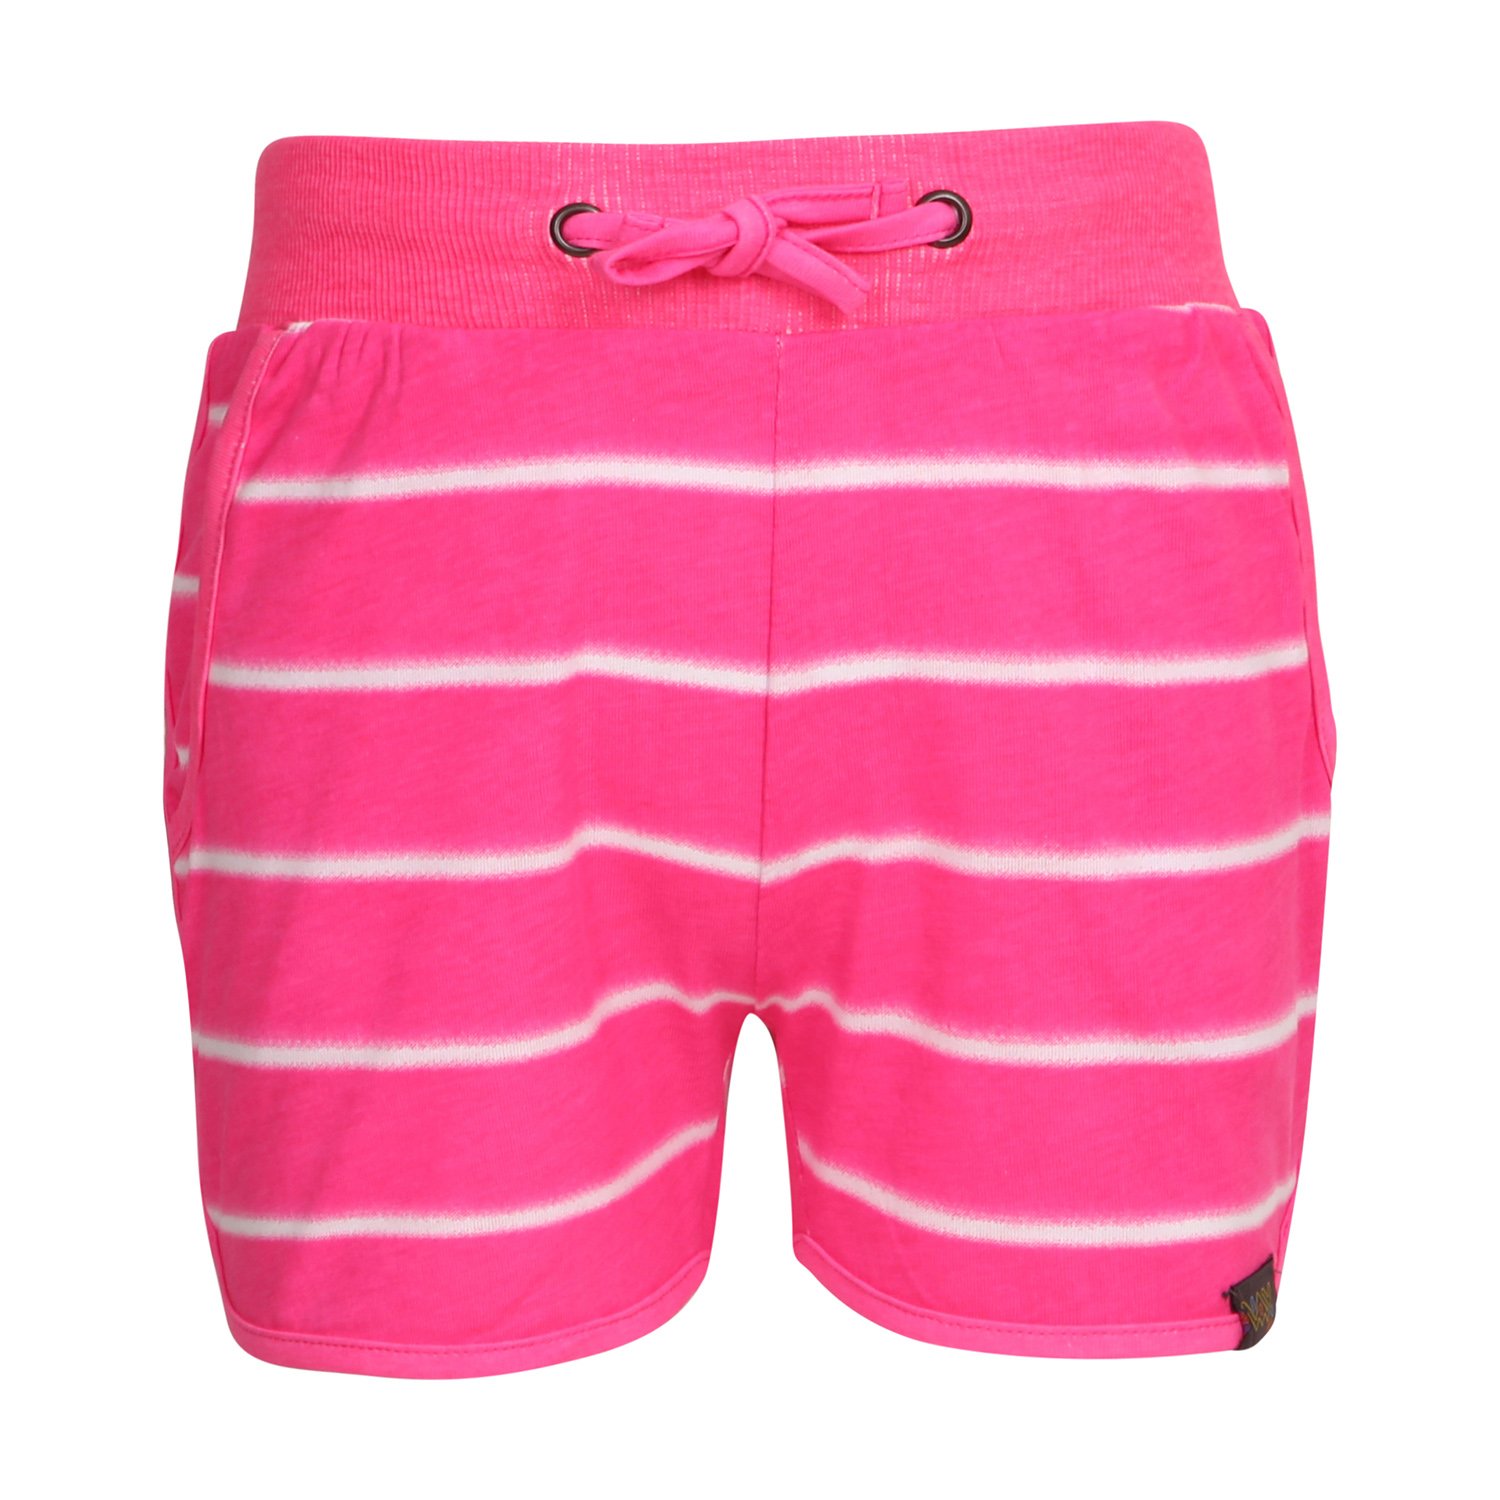 Kids shorts nax NAX NARNO neon knockout pink variant pa